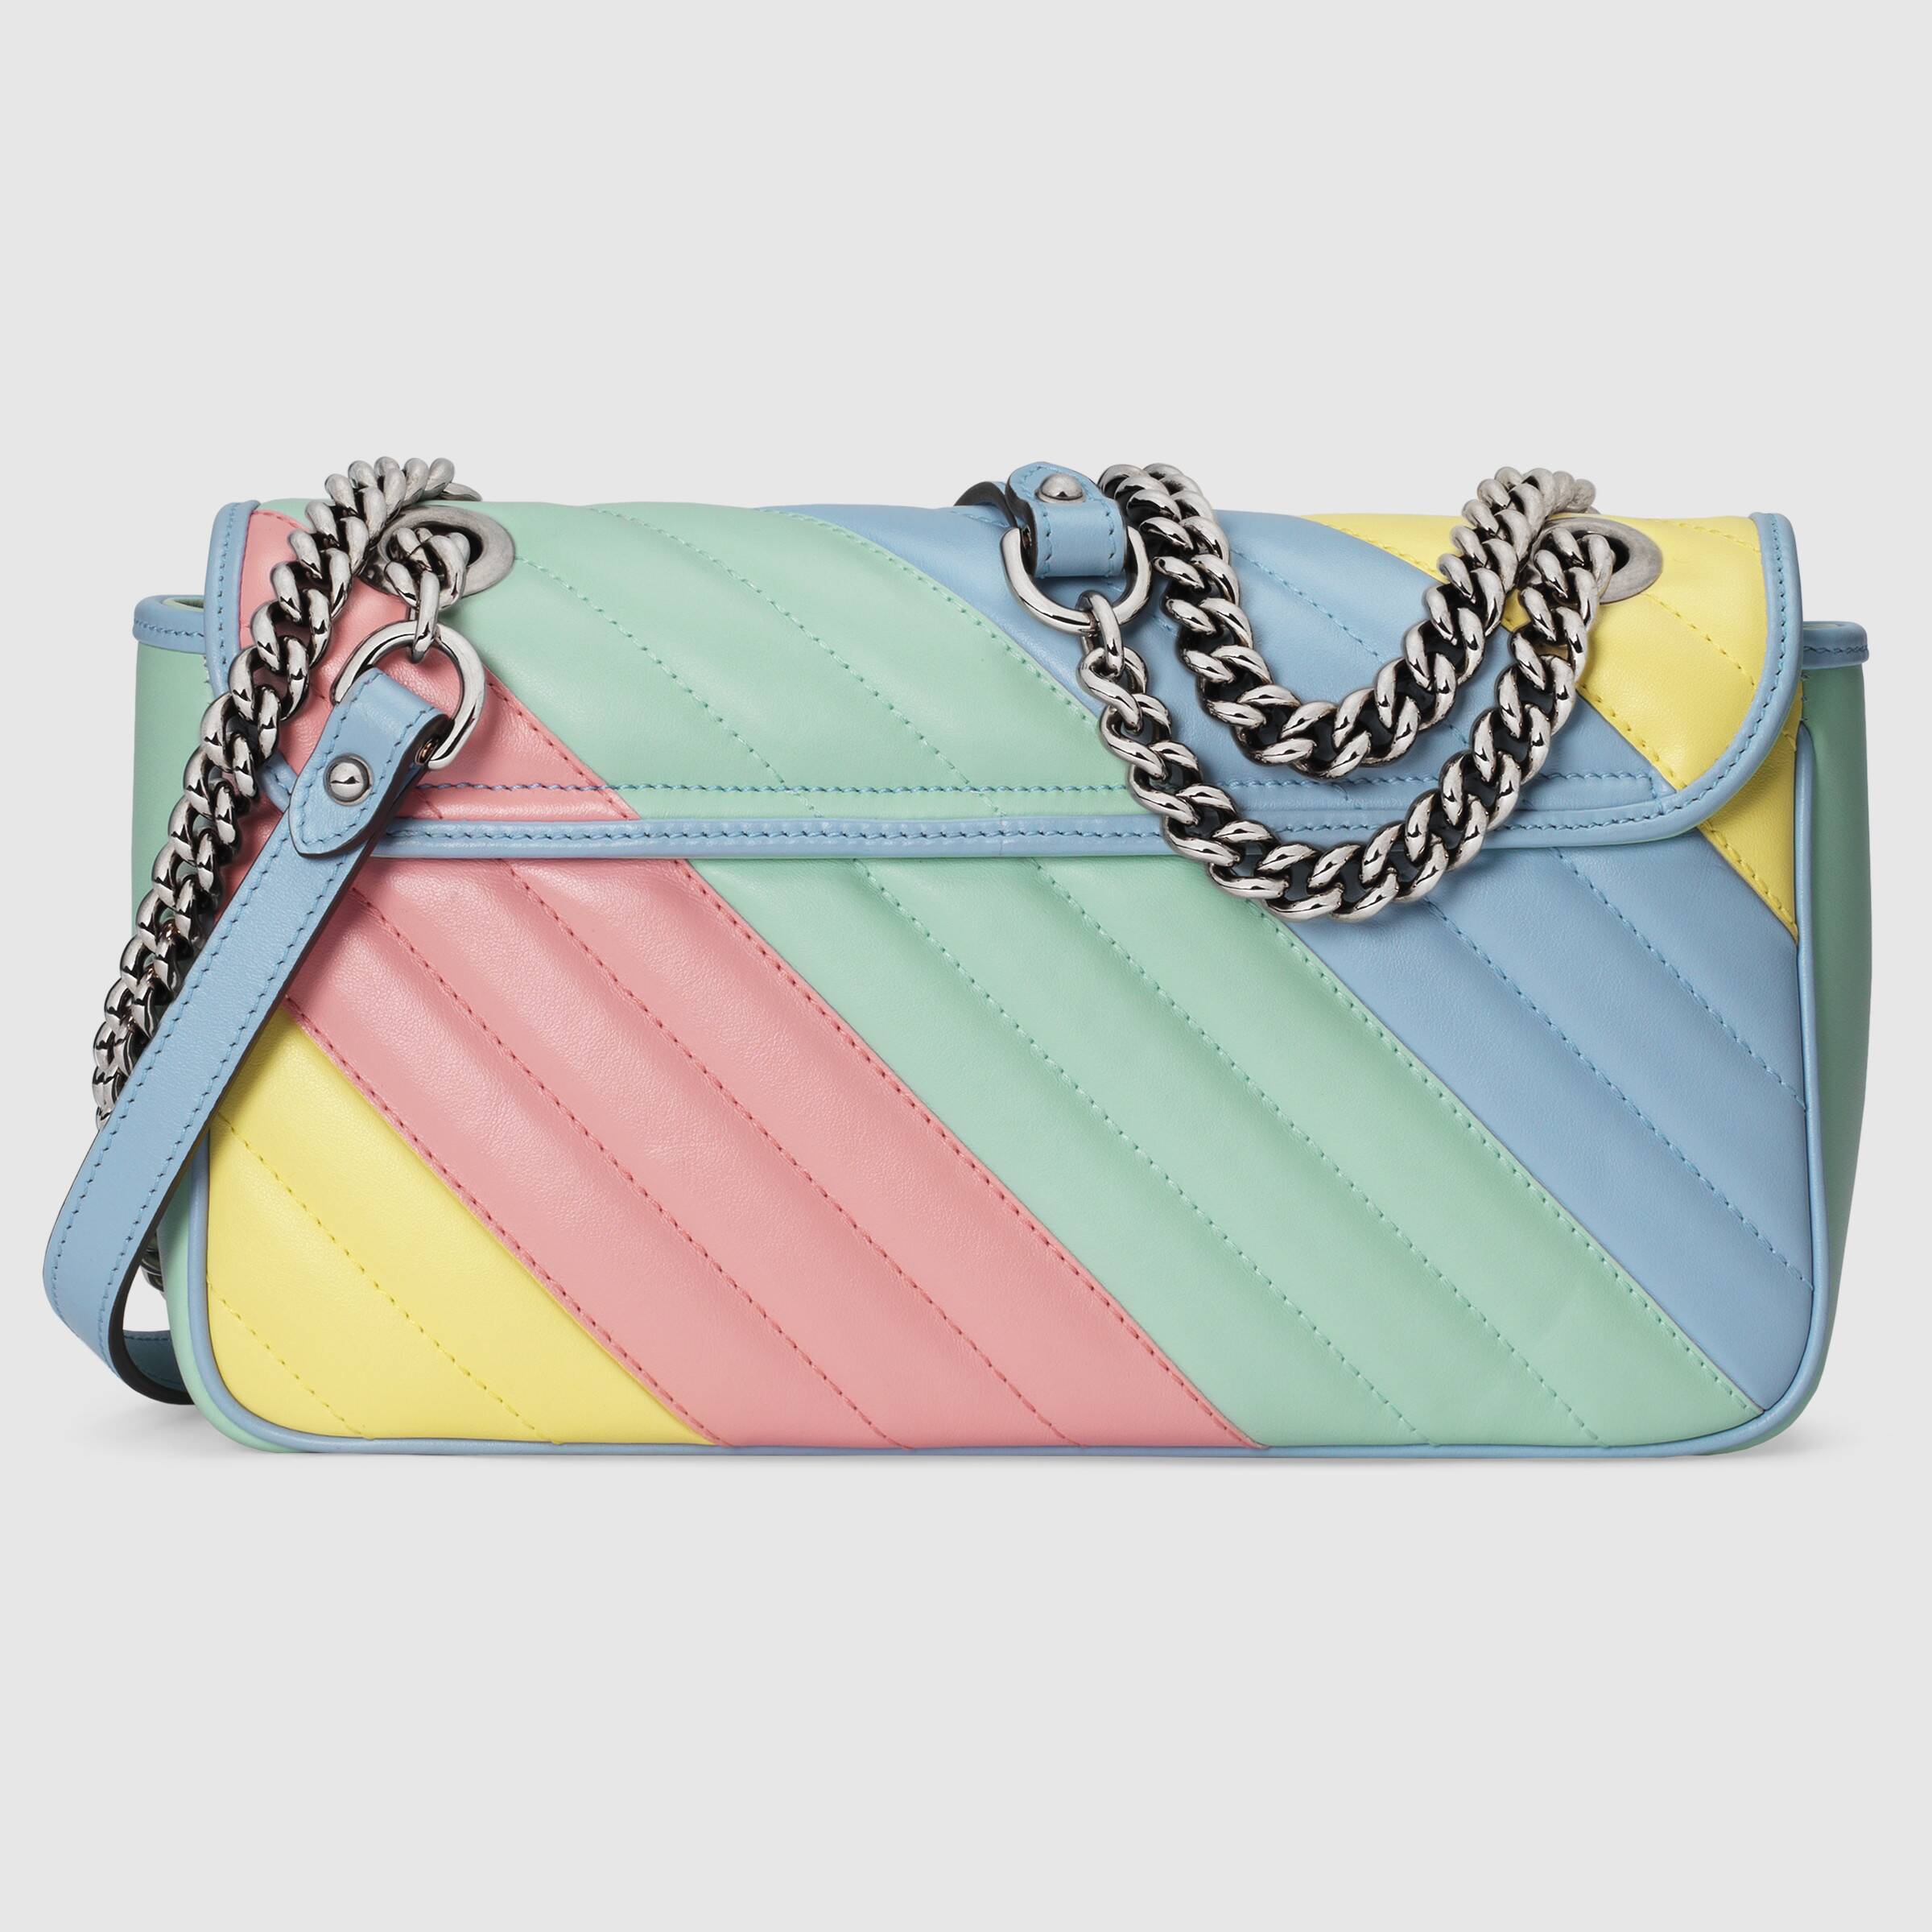 Gucci GG Marmont Small Shoulder Bag Multicolored Pastel